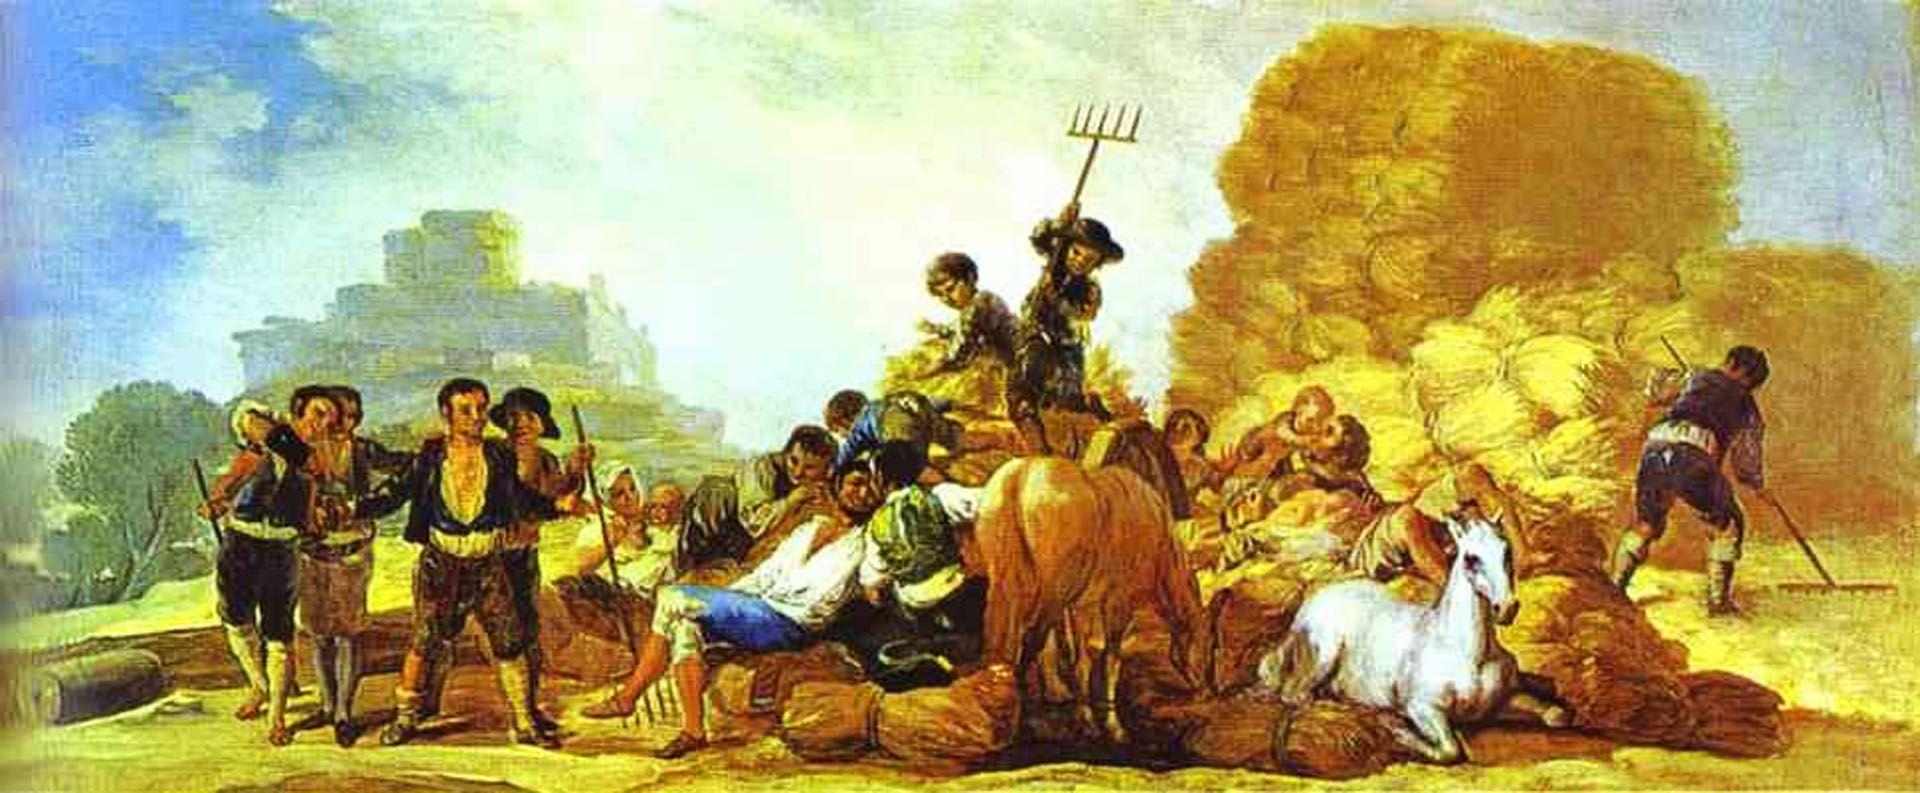 Summer Goya Wallpaper Image